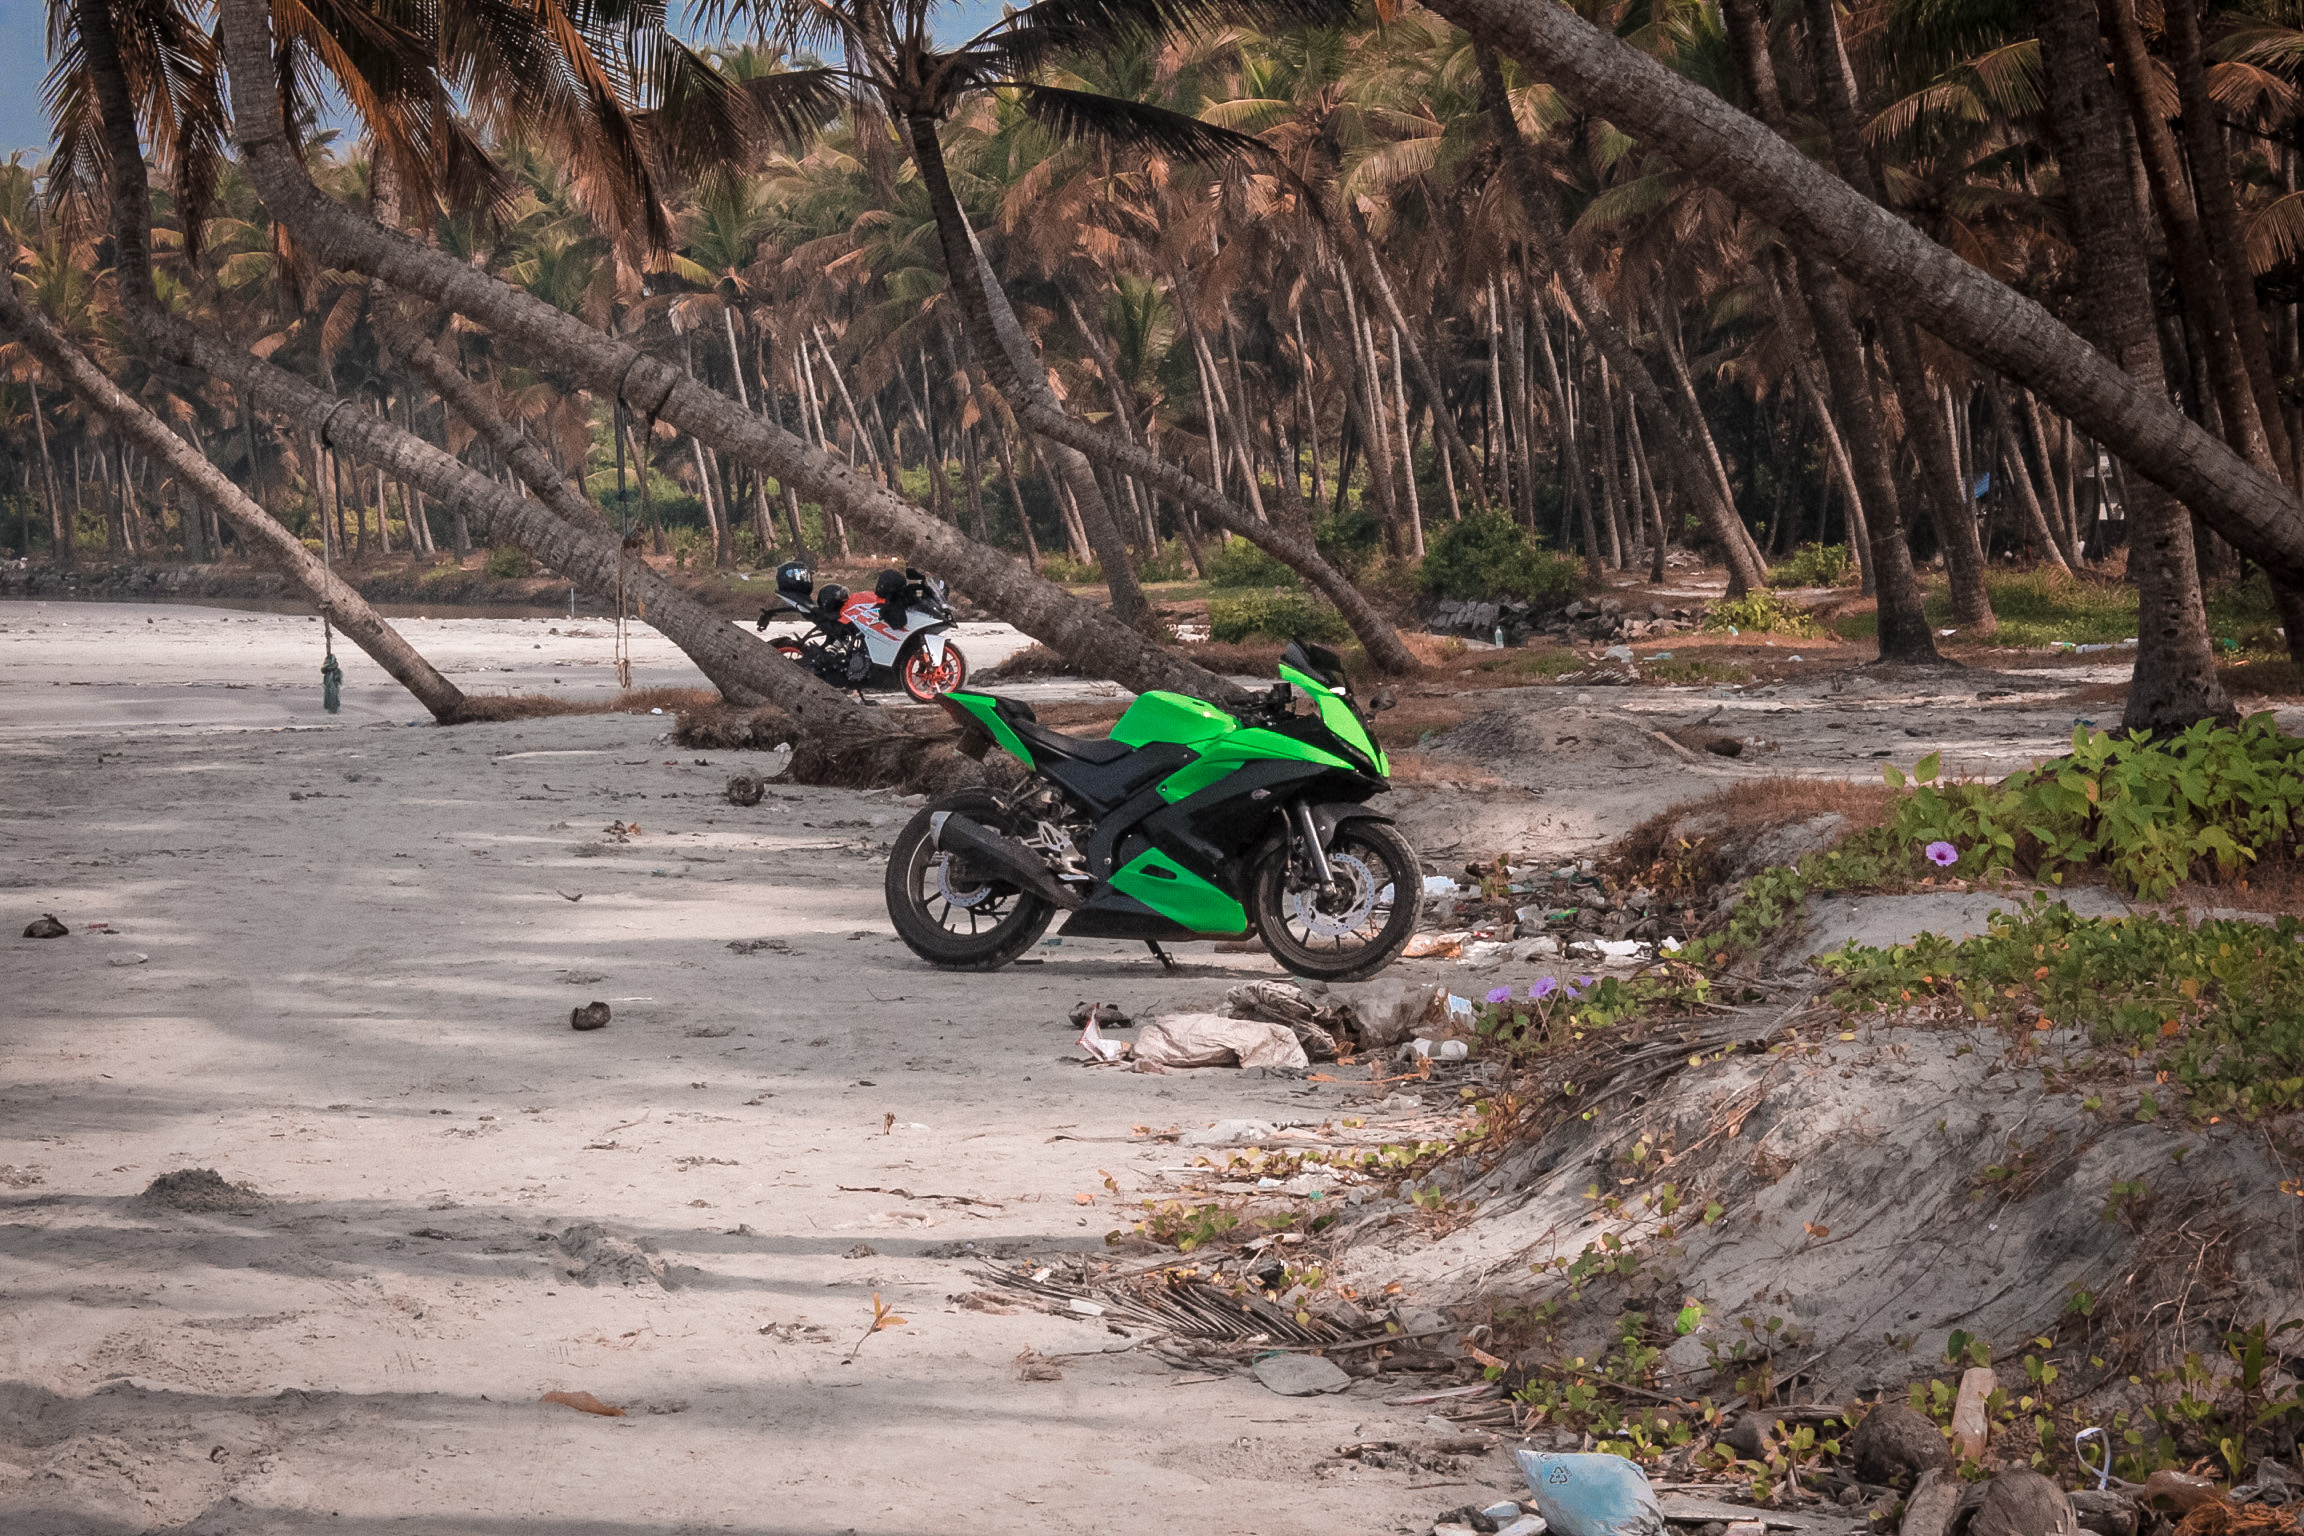 Motorbikes in coconut trees